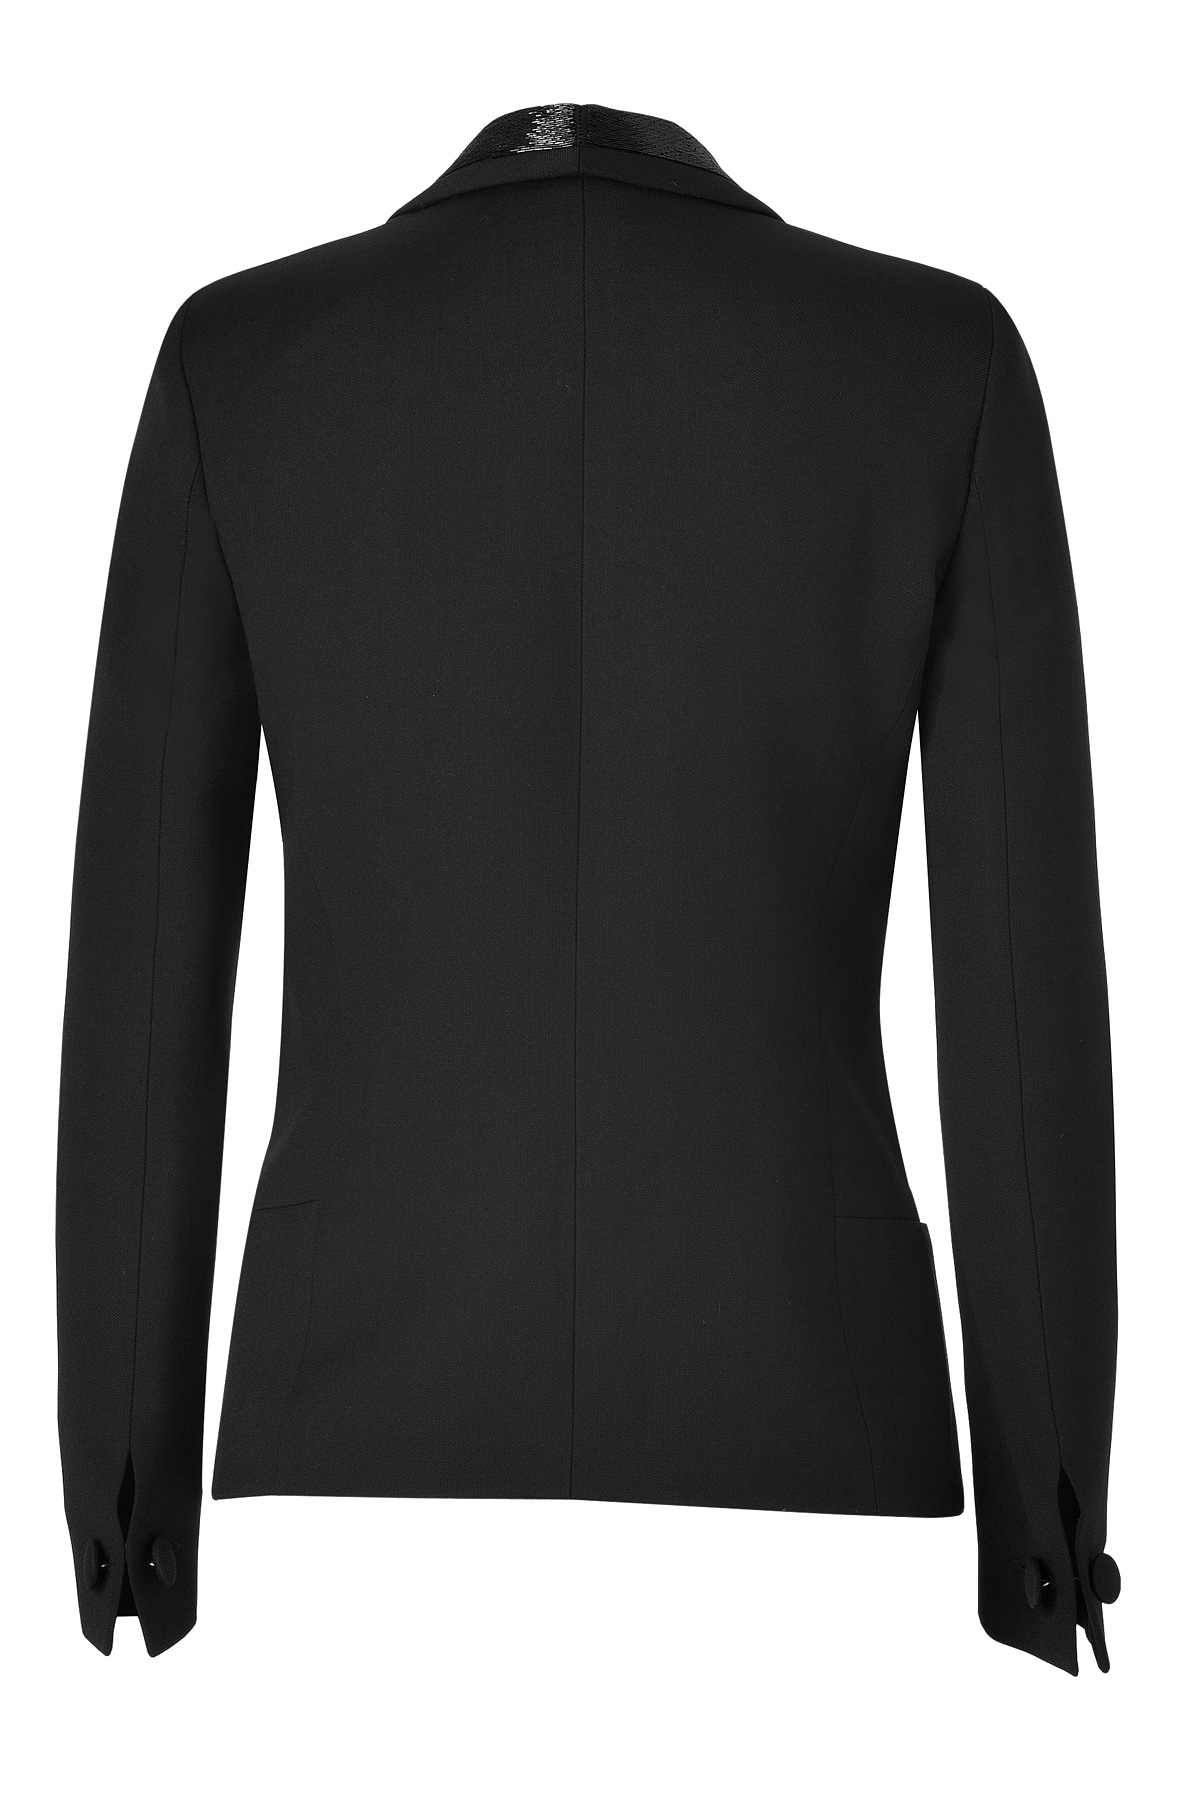 Lyst - Emilio Pucci Black Wool-Silk Embellished Tuxedo Jacket in Black